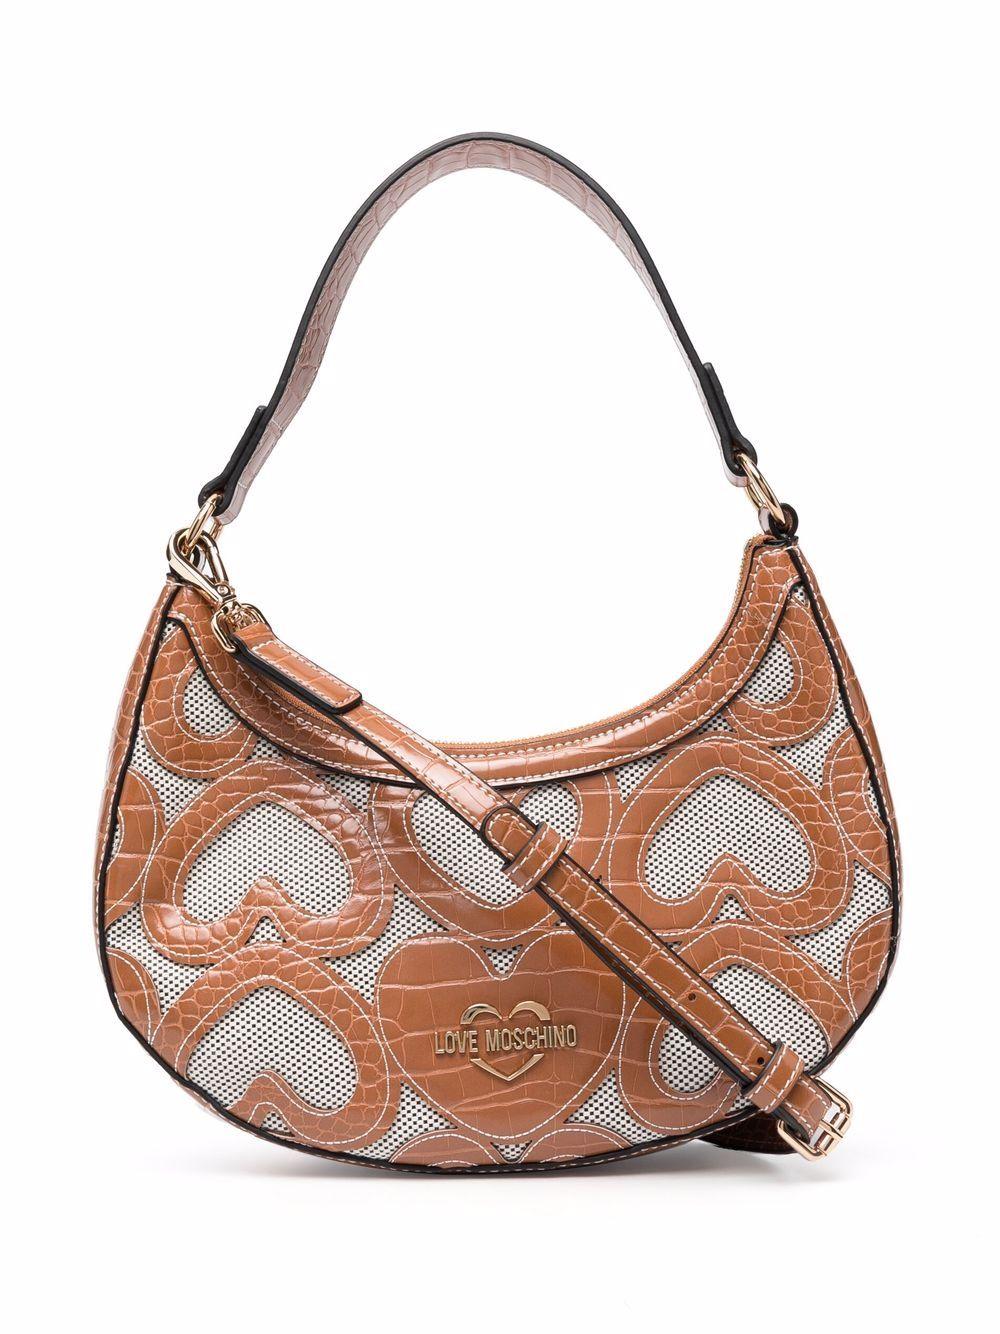 Love Moschino Women's Studded Heart Leather Tote Handbag 